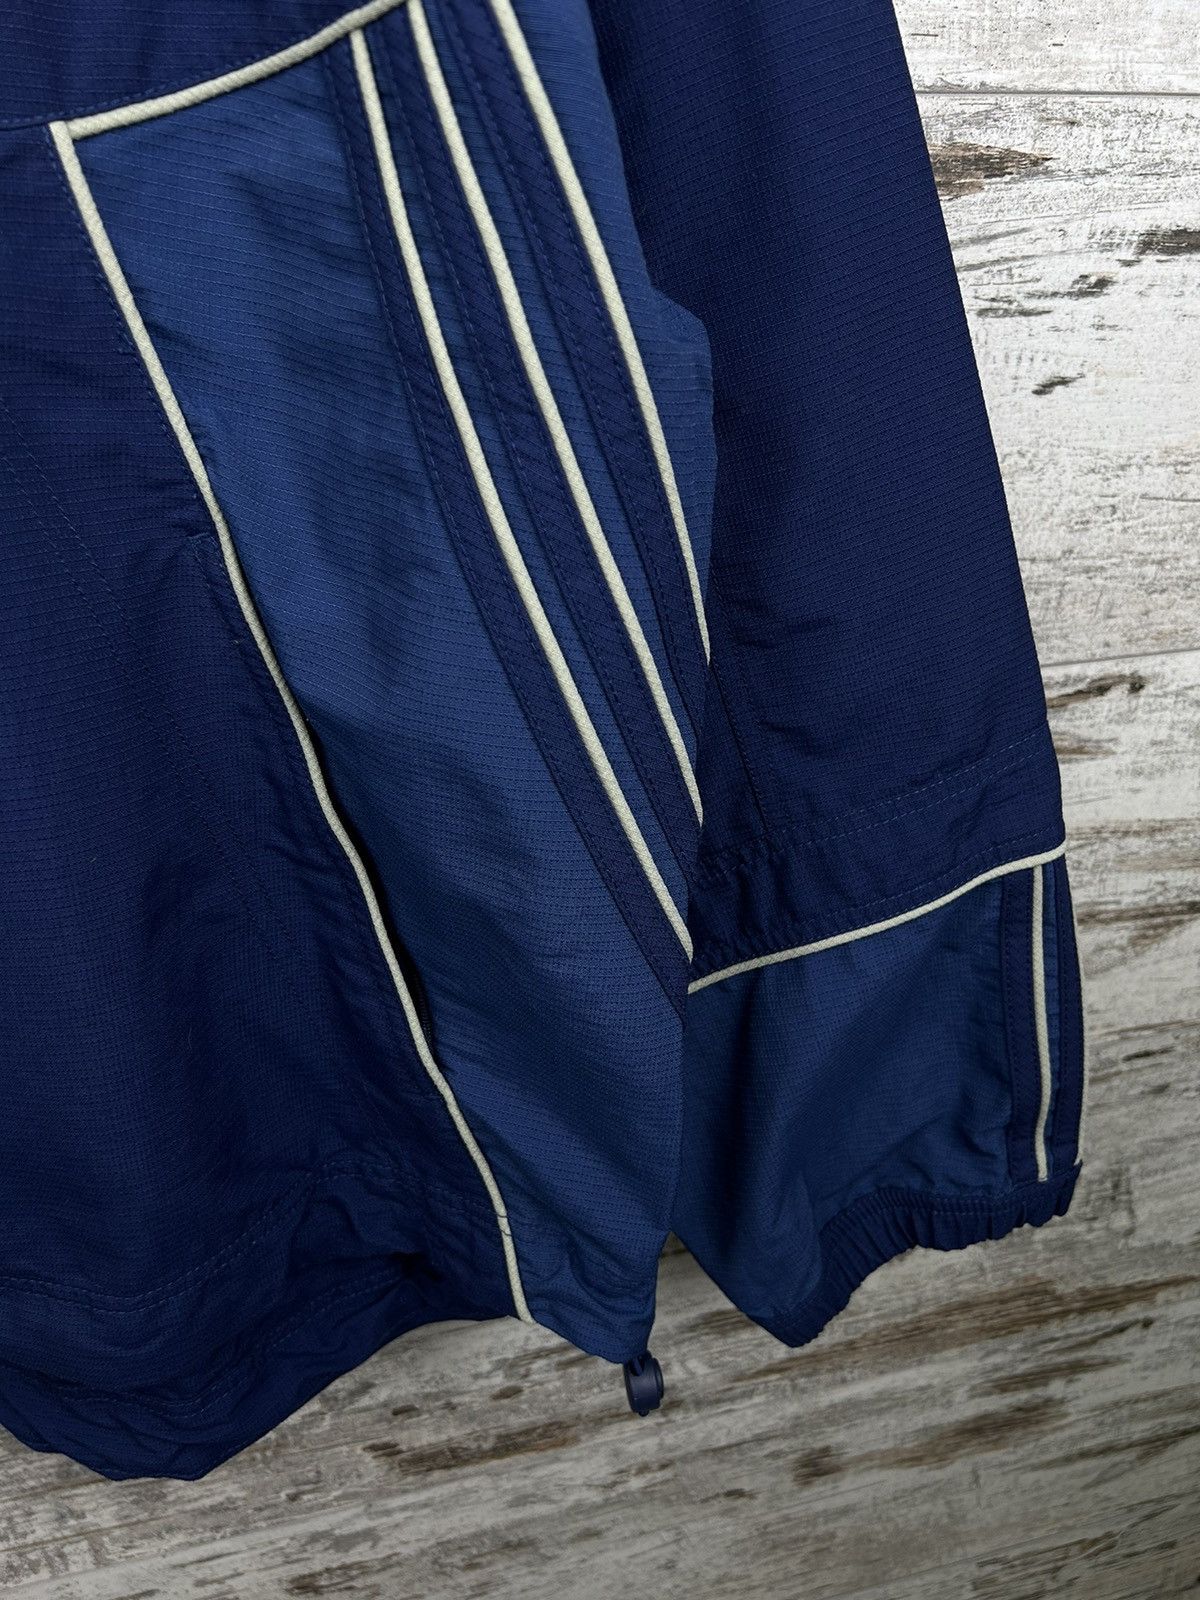 Adidas Mens Vintage Adidas Stripes Olympic track jacket y2k rare Size US M / EU 48-50 / 2 - 5 Thumbnail